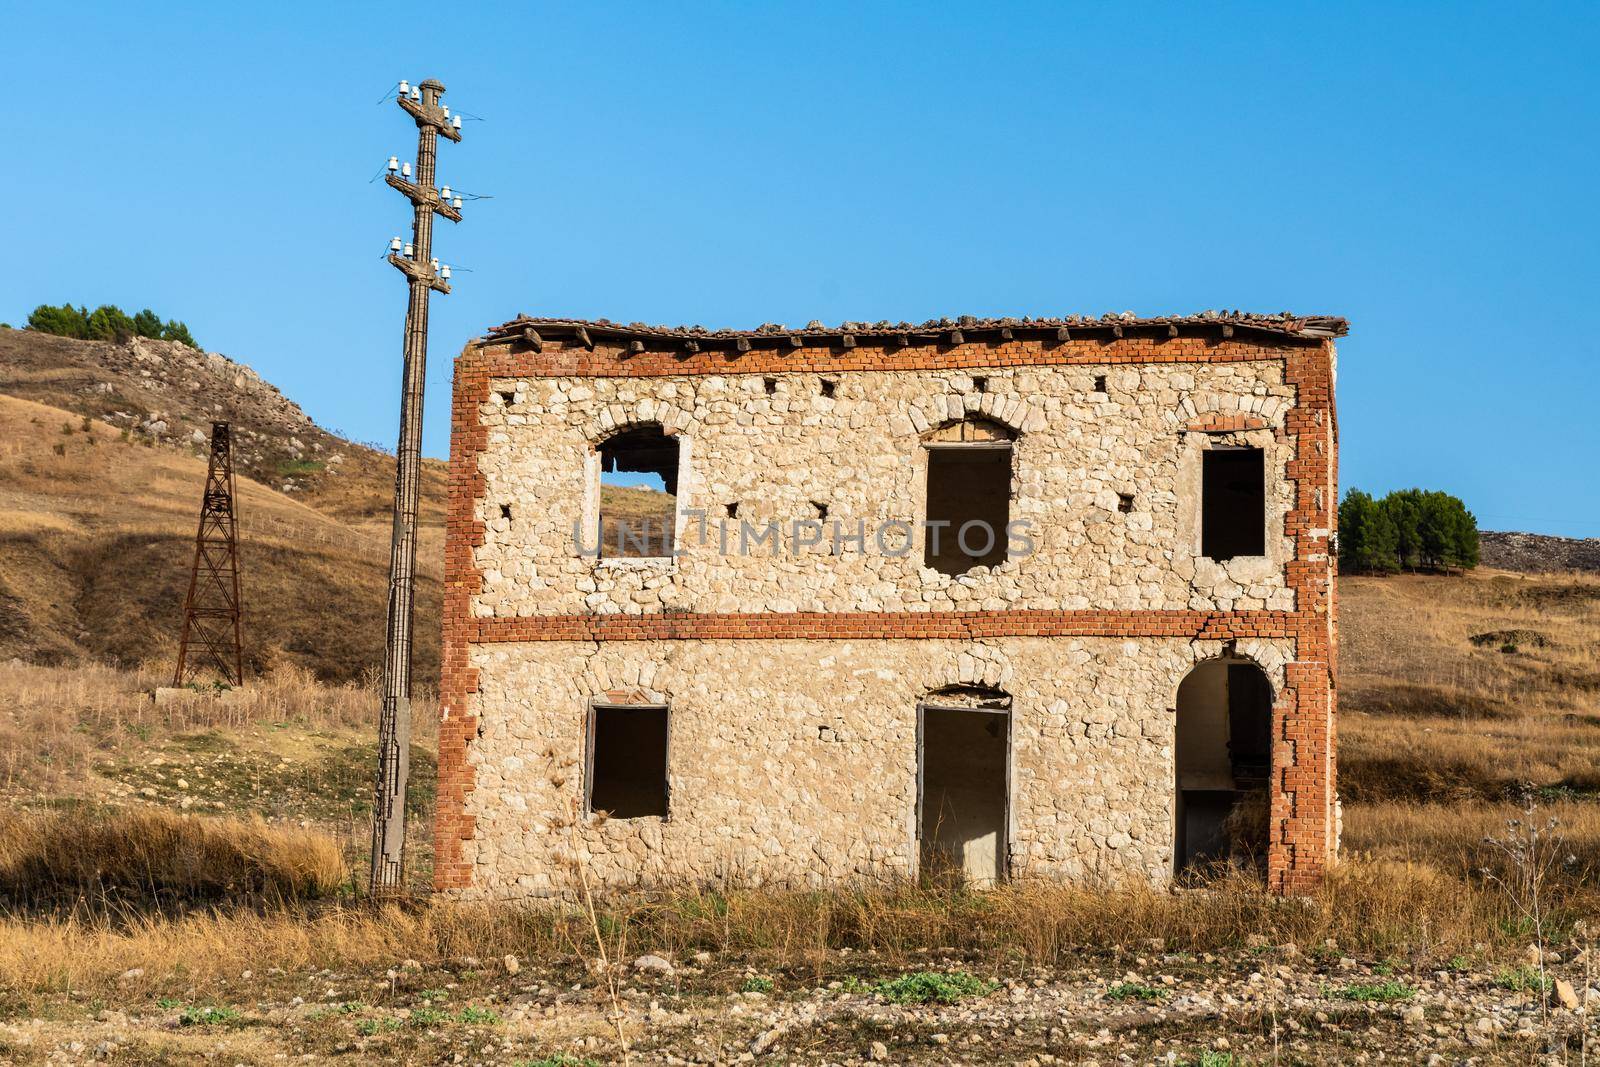 Abandoned sulphur mining complex Trabia Tallarita in Riesi, Sicily, Italy by mauricallari